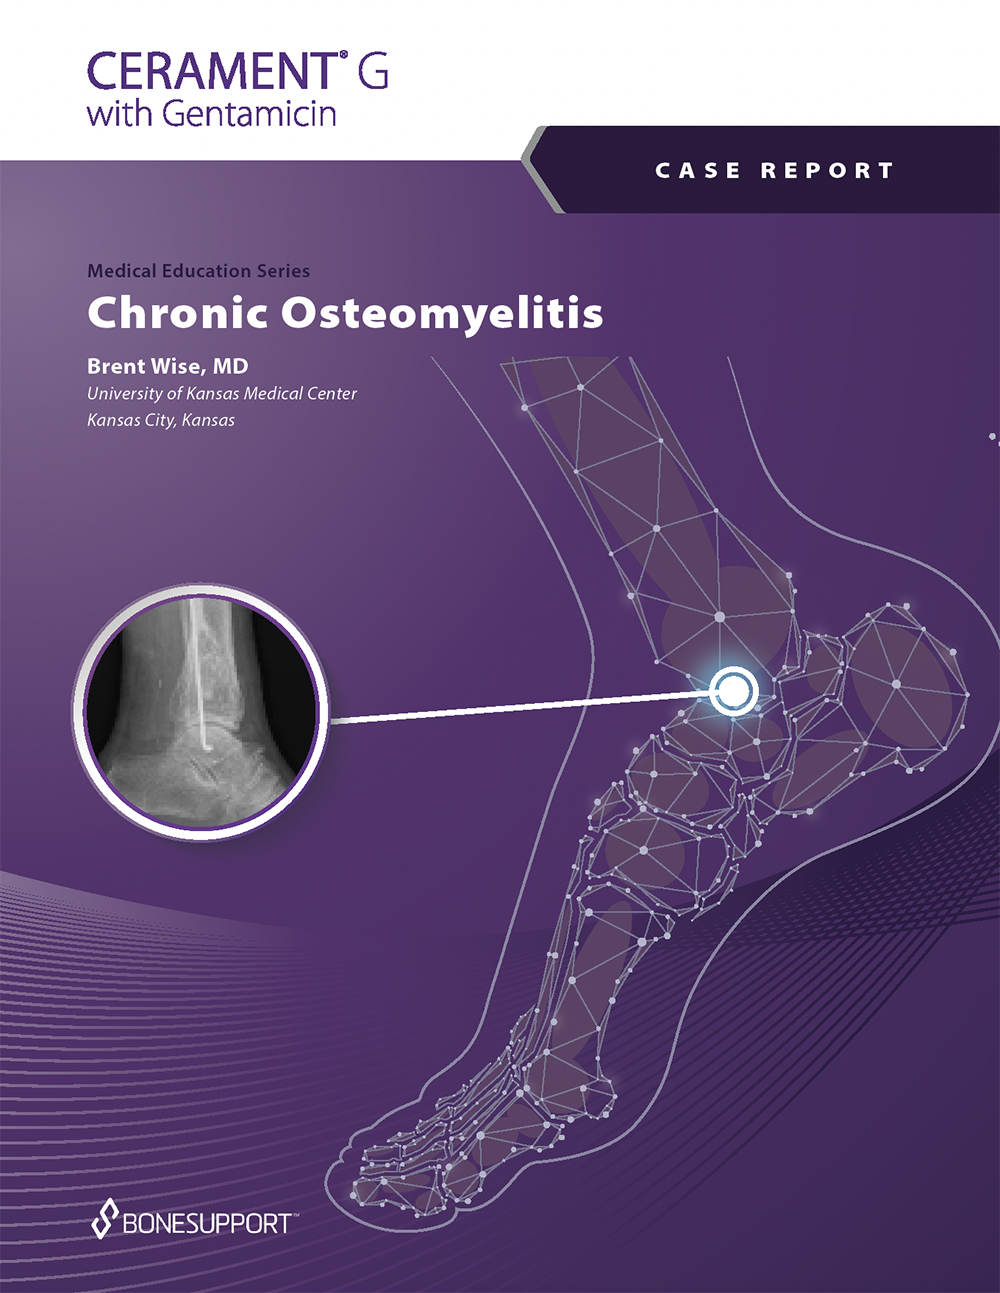 Chronic Osteomyelitis of the Distal Tibia  Brent Wise, MD University of Kansas Medical Center Kansas City, Kansas